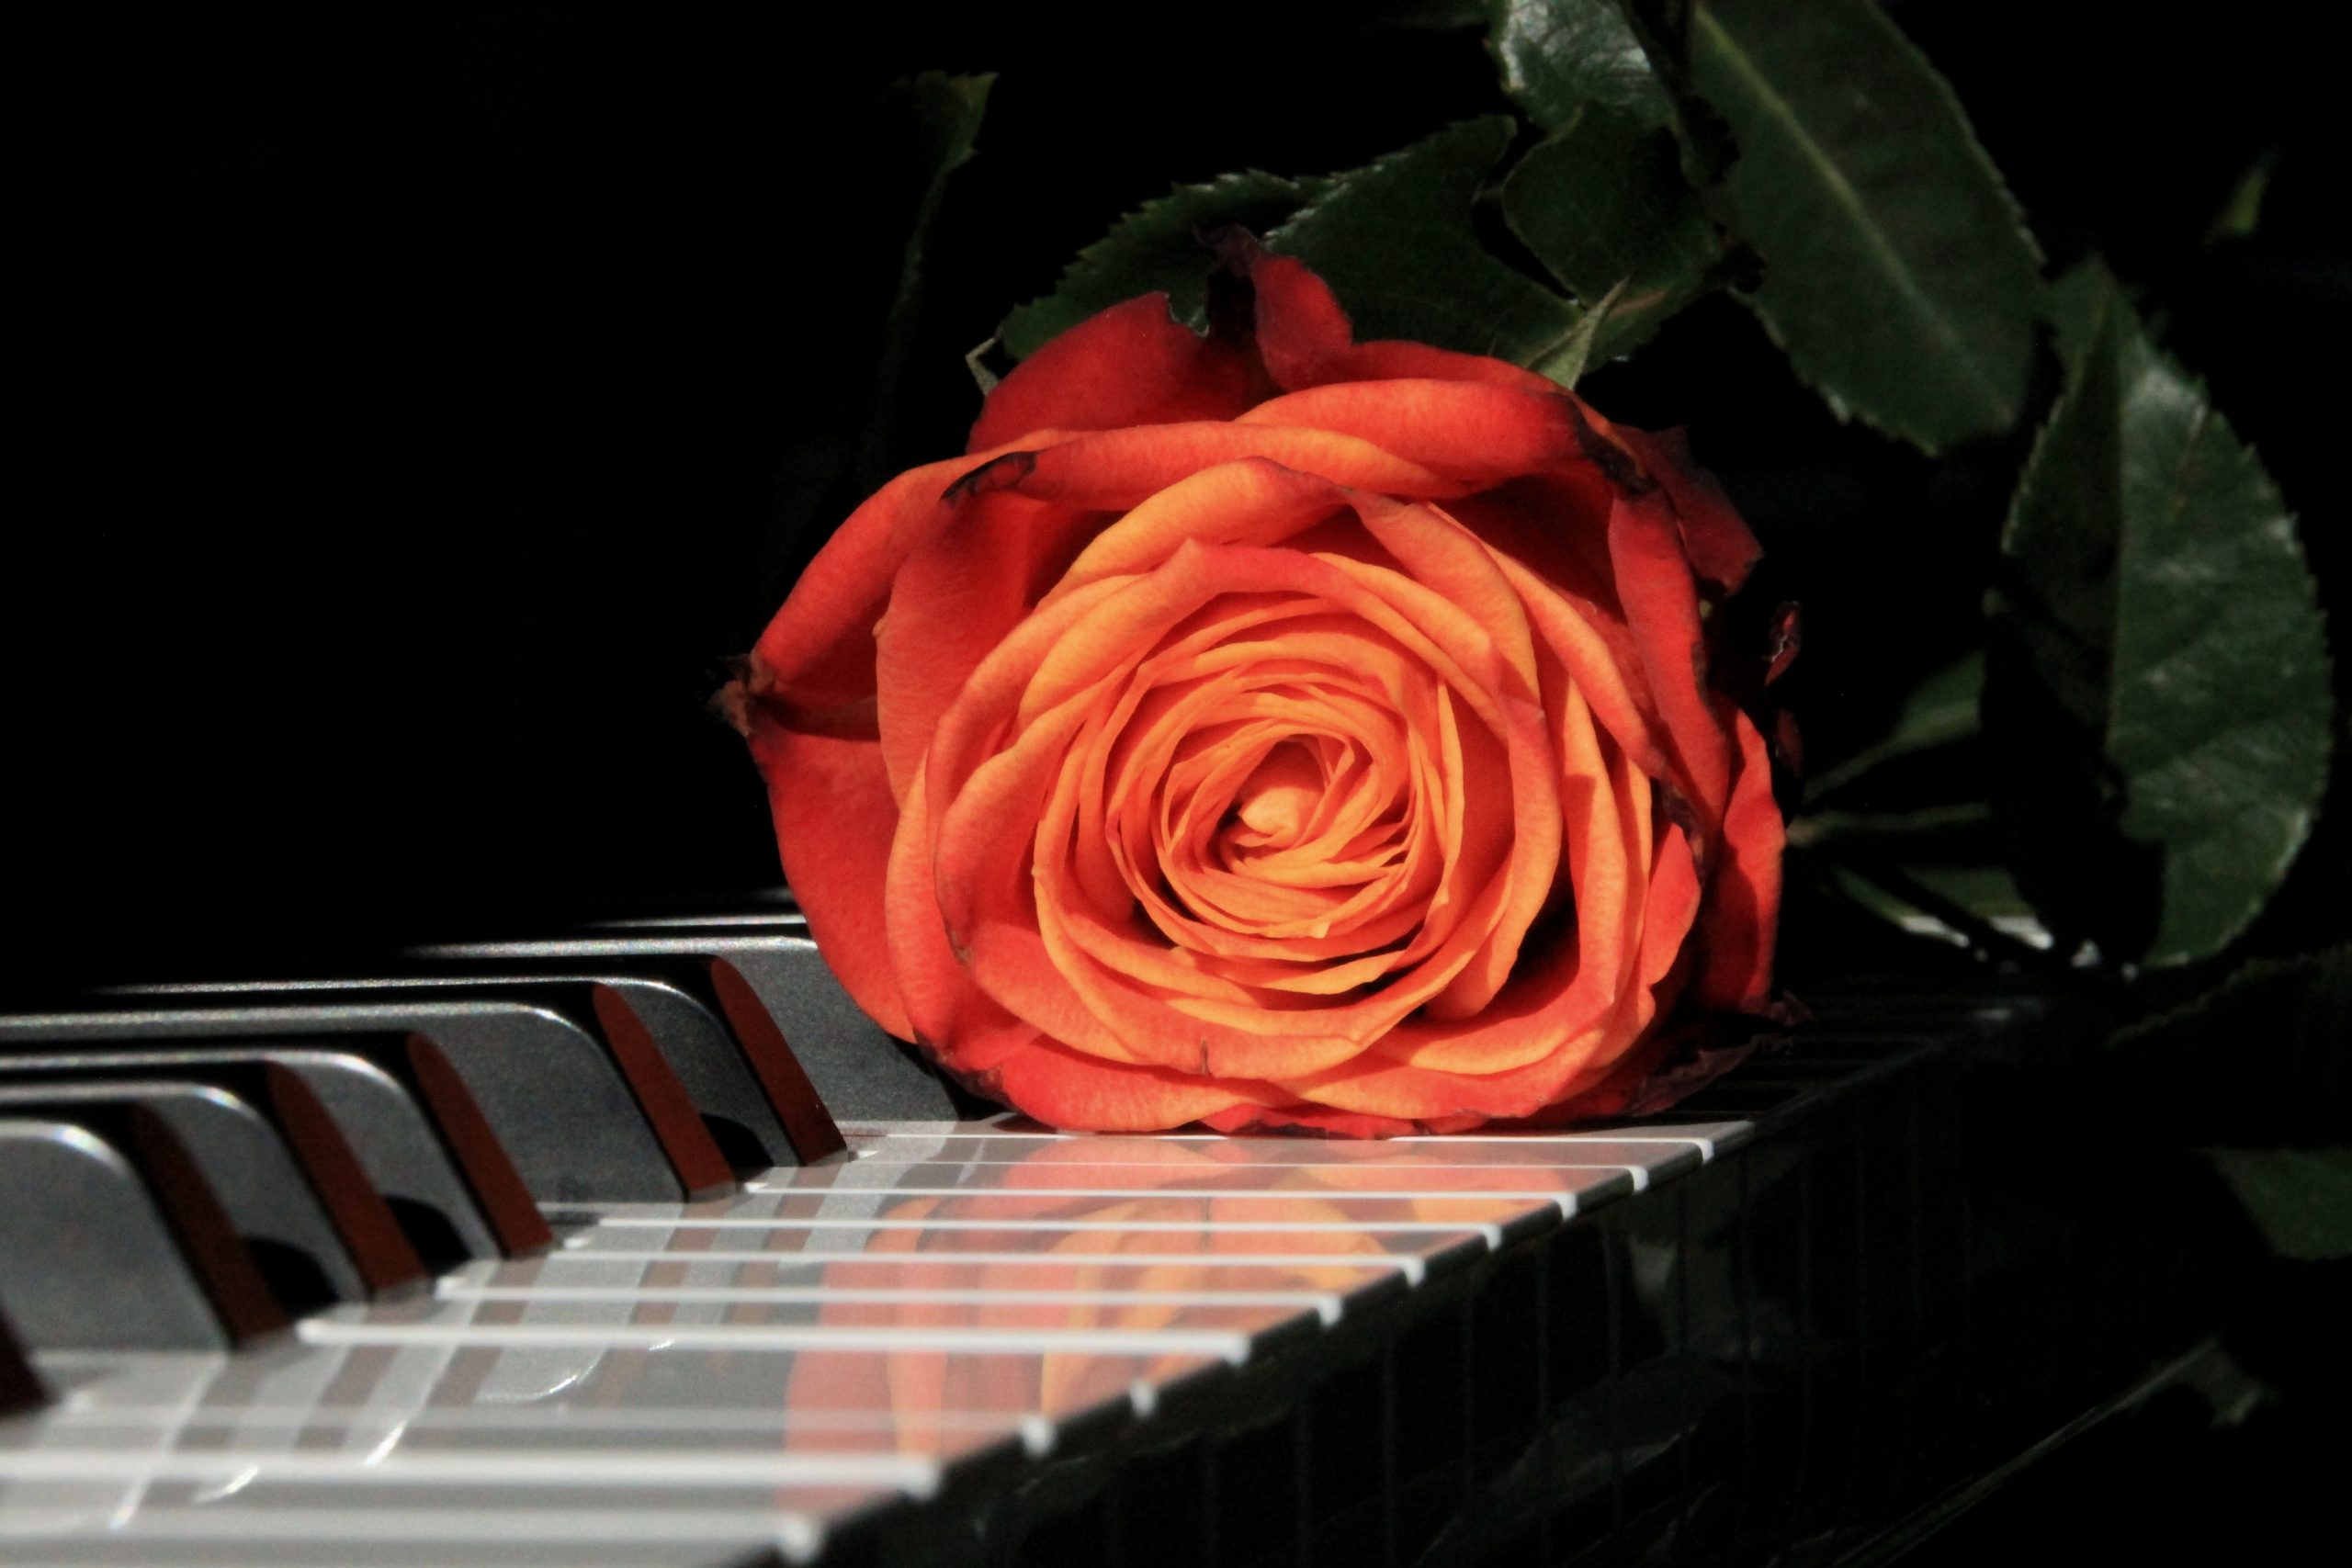 Rose piano